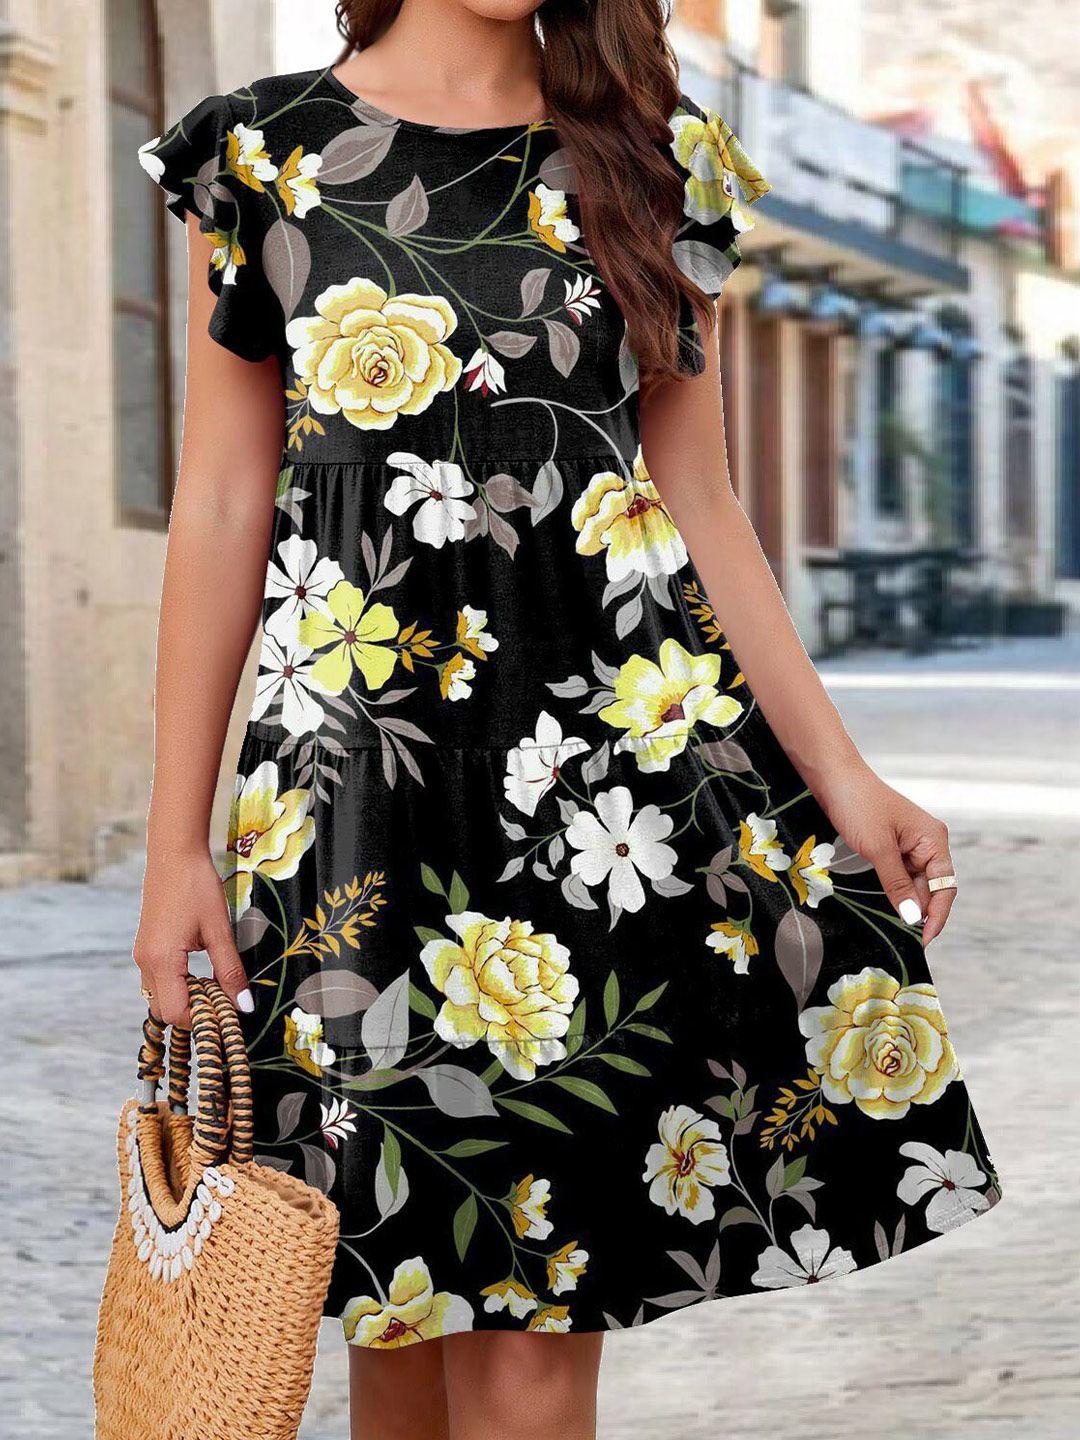 stylecast x kpop yellow floral print a-line dress